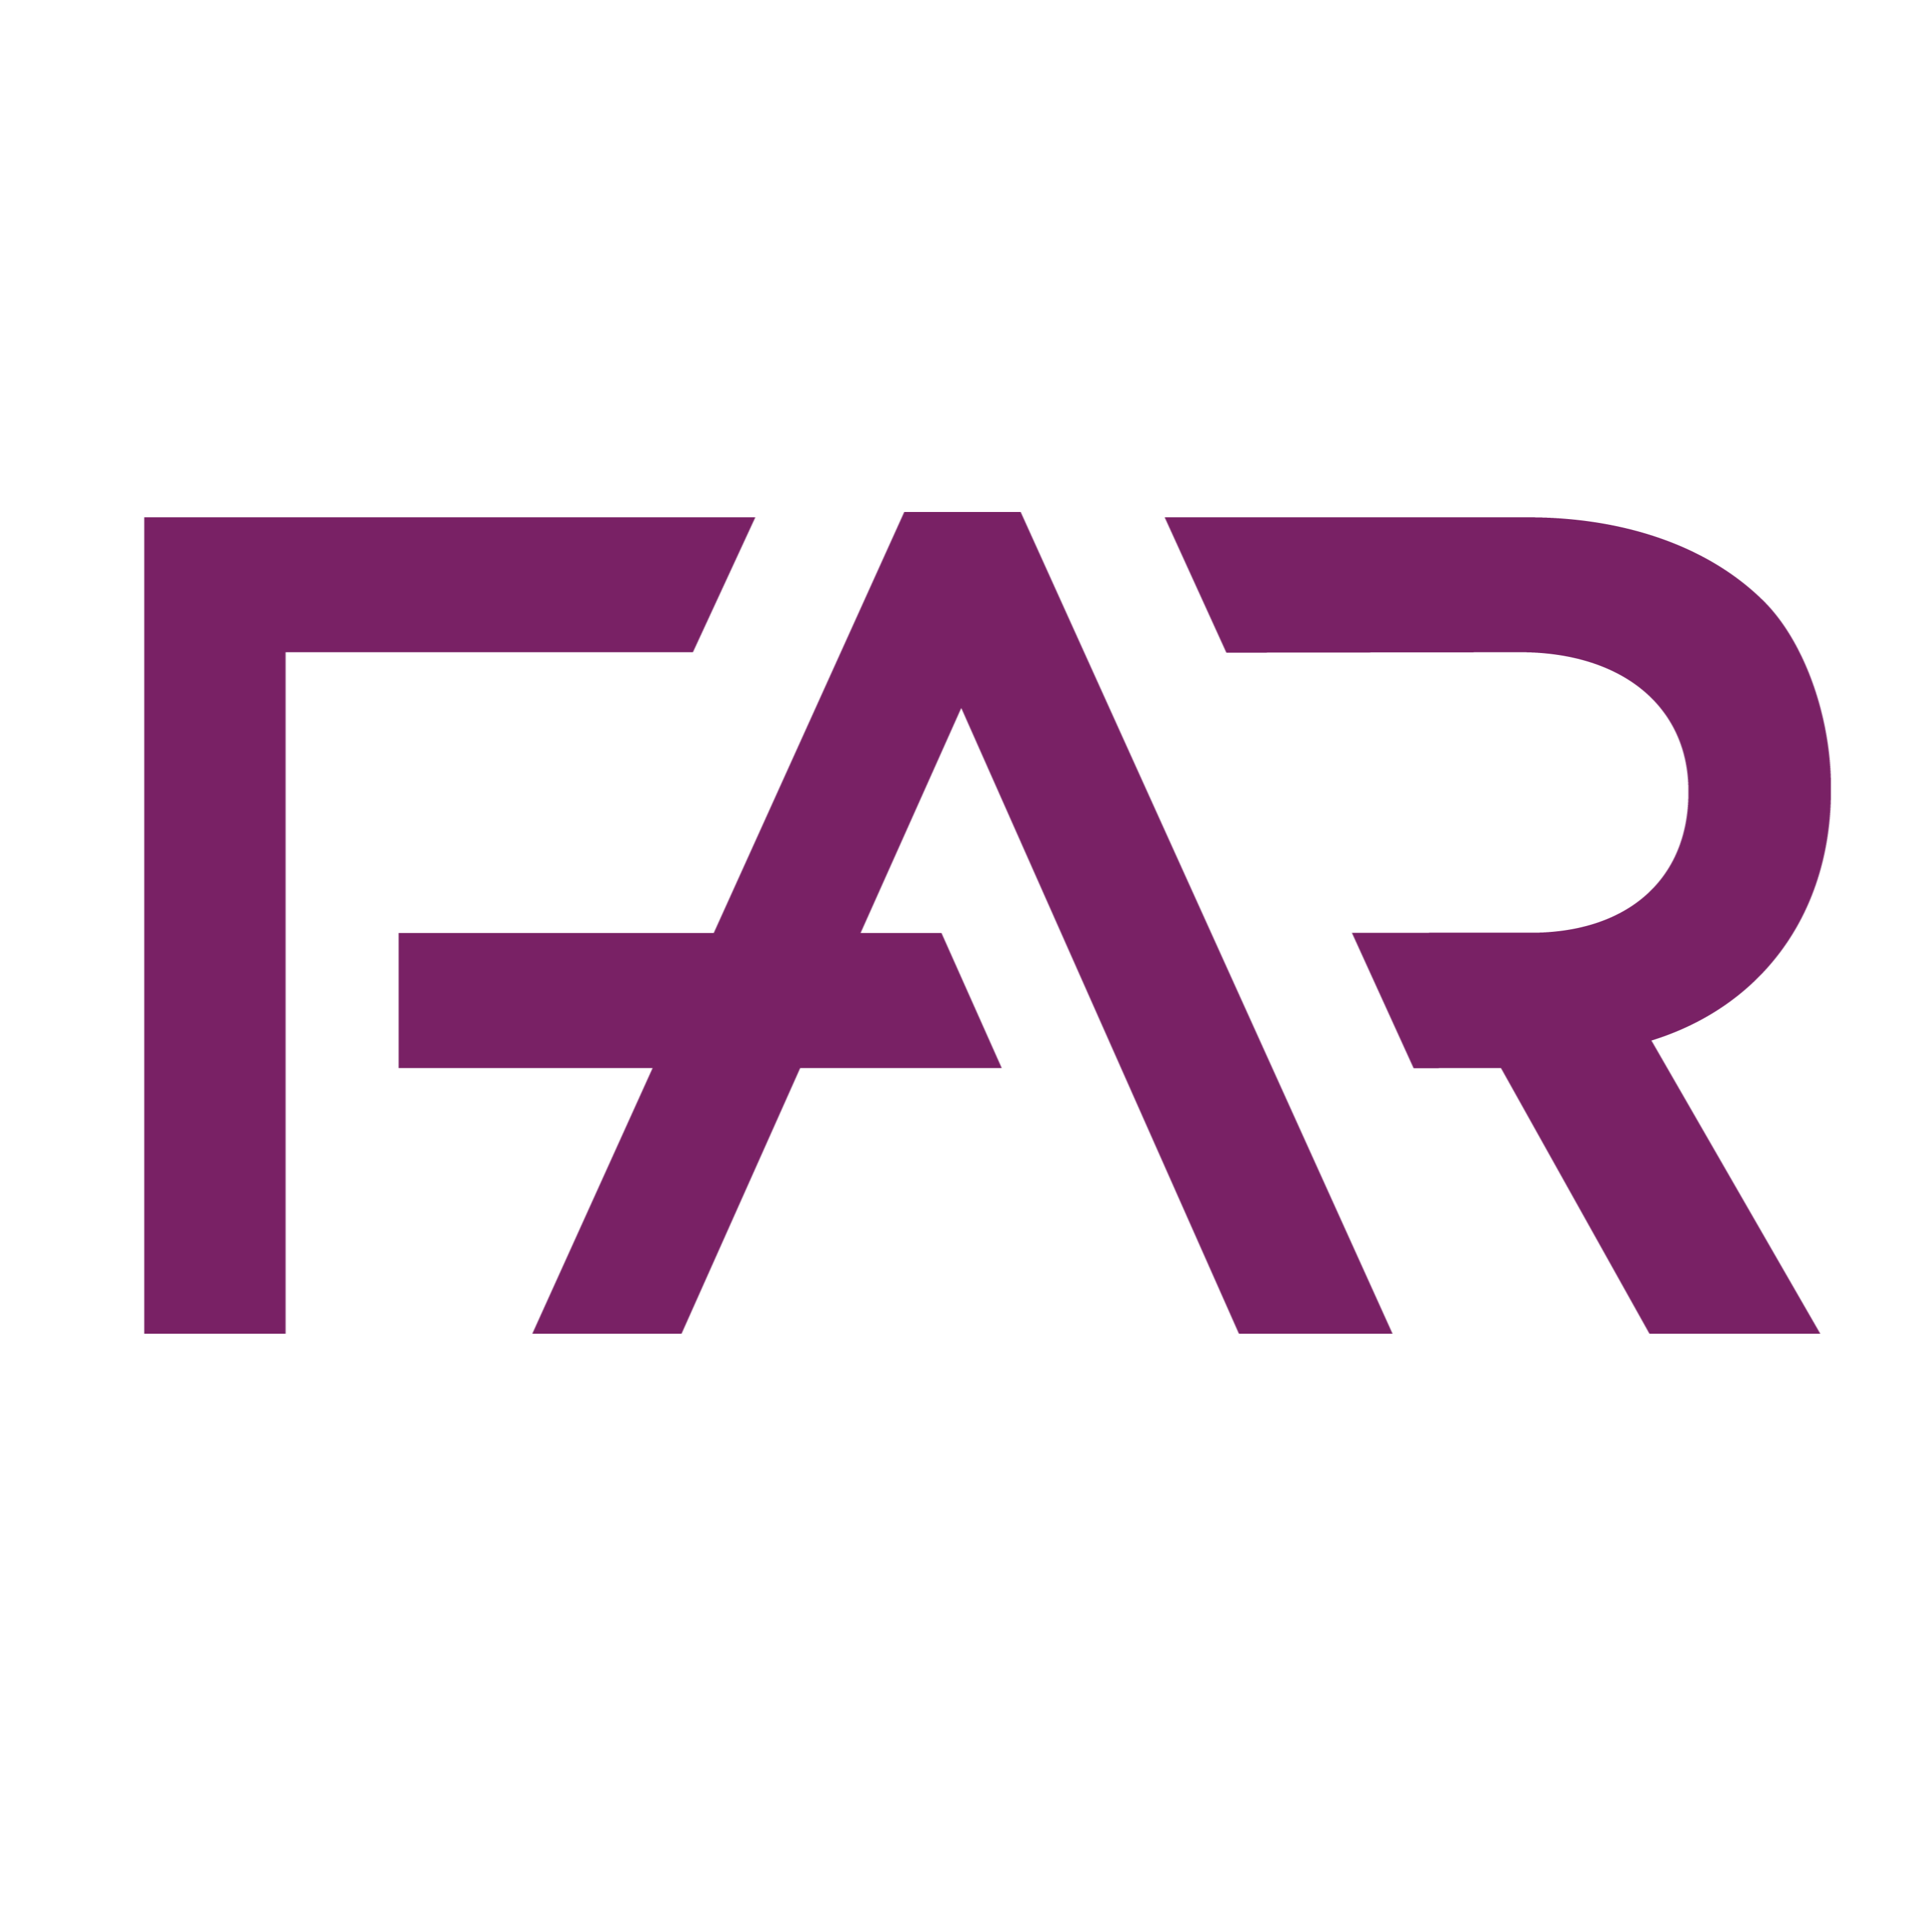 FAR:s logo